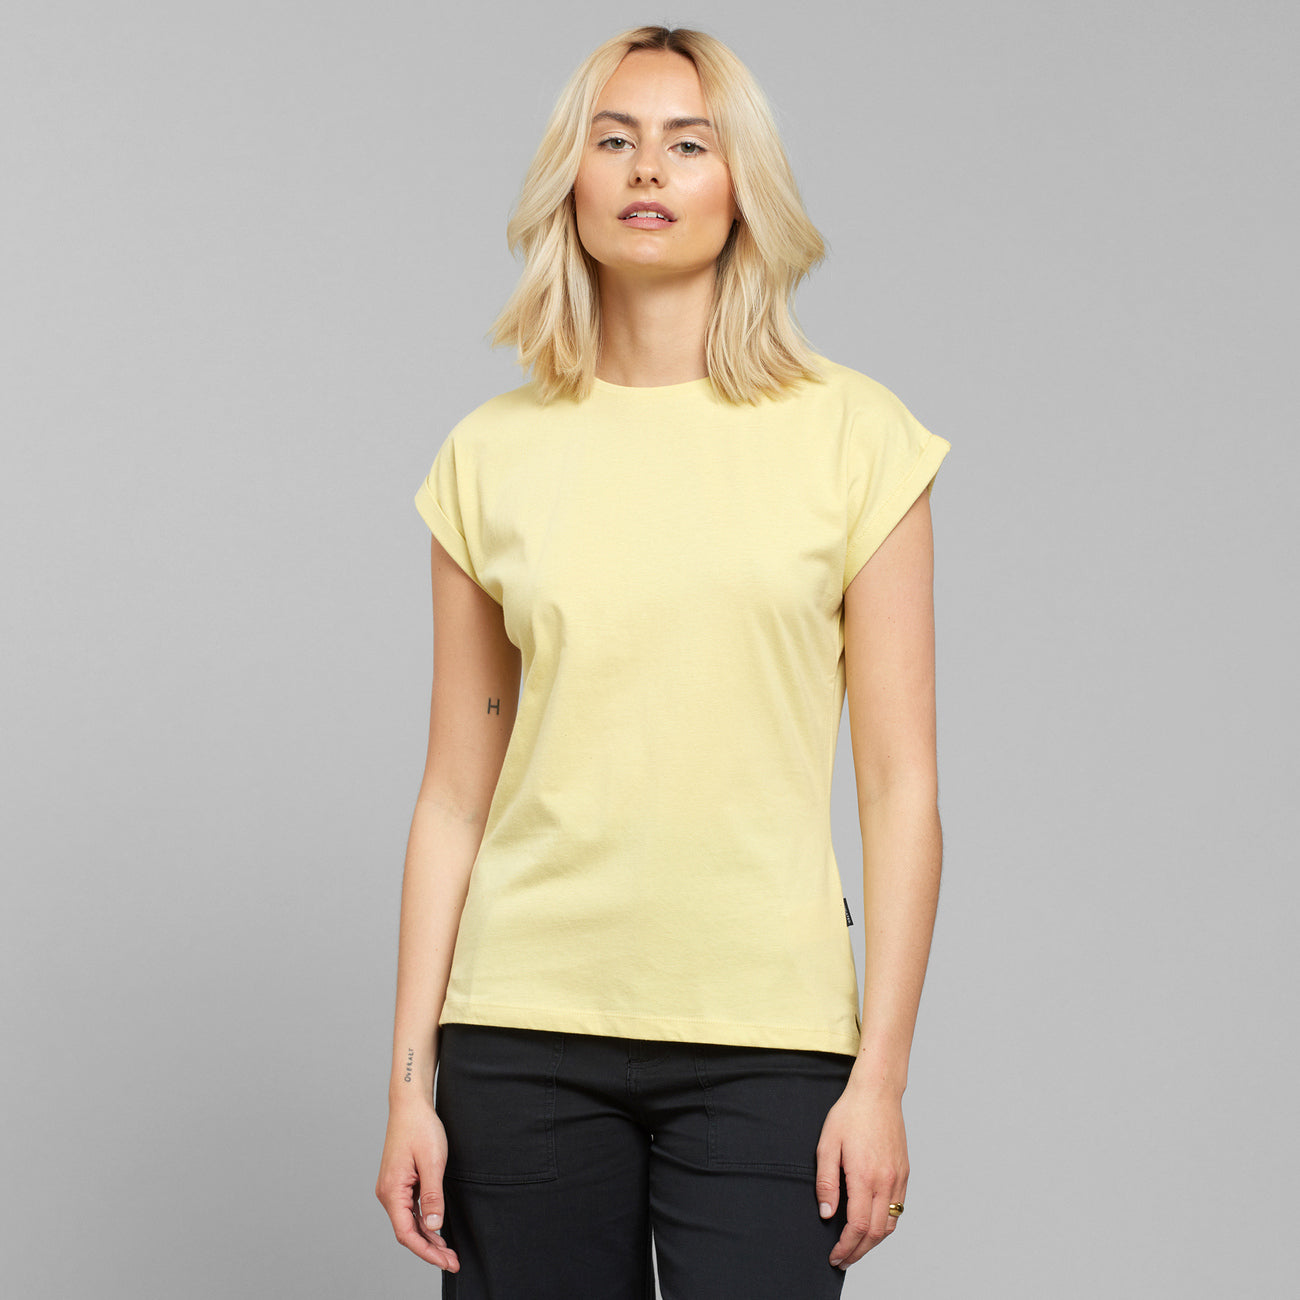 T-Shirt Visby Base Dusty yellow - LEEF mode en accessoires